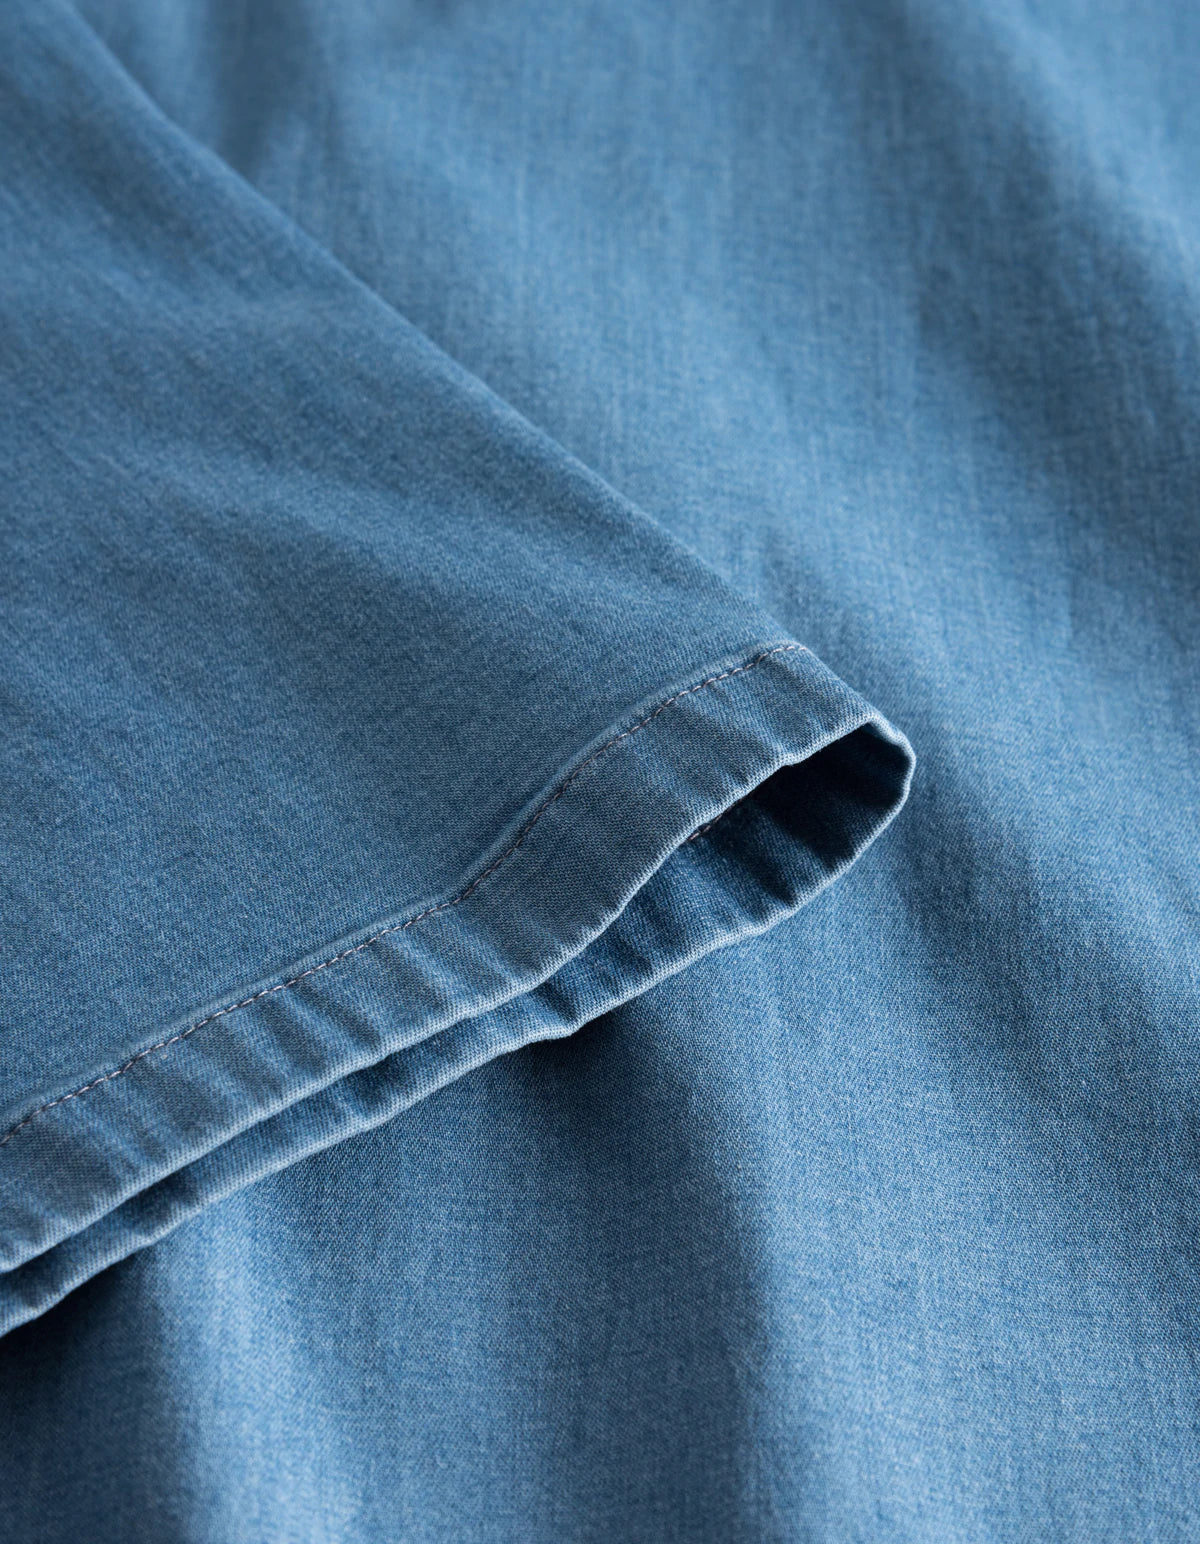 Langdon Chambray SS Shirt - Light Blue Wash